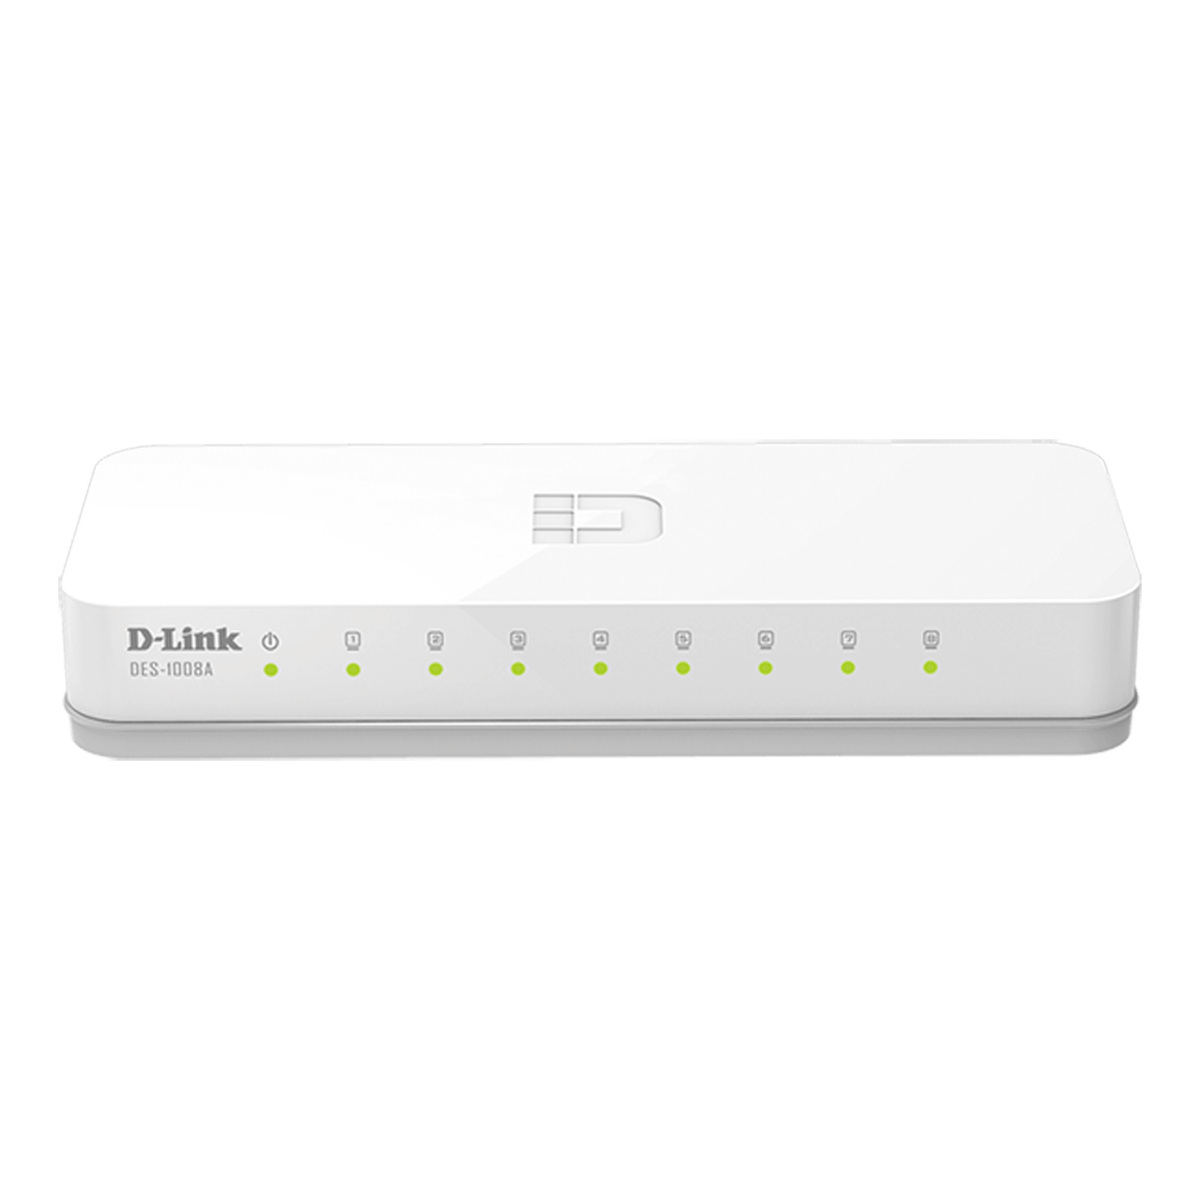 D-Link 8-Port 10/100 Network Switch, White, DES-1008A